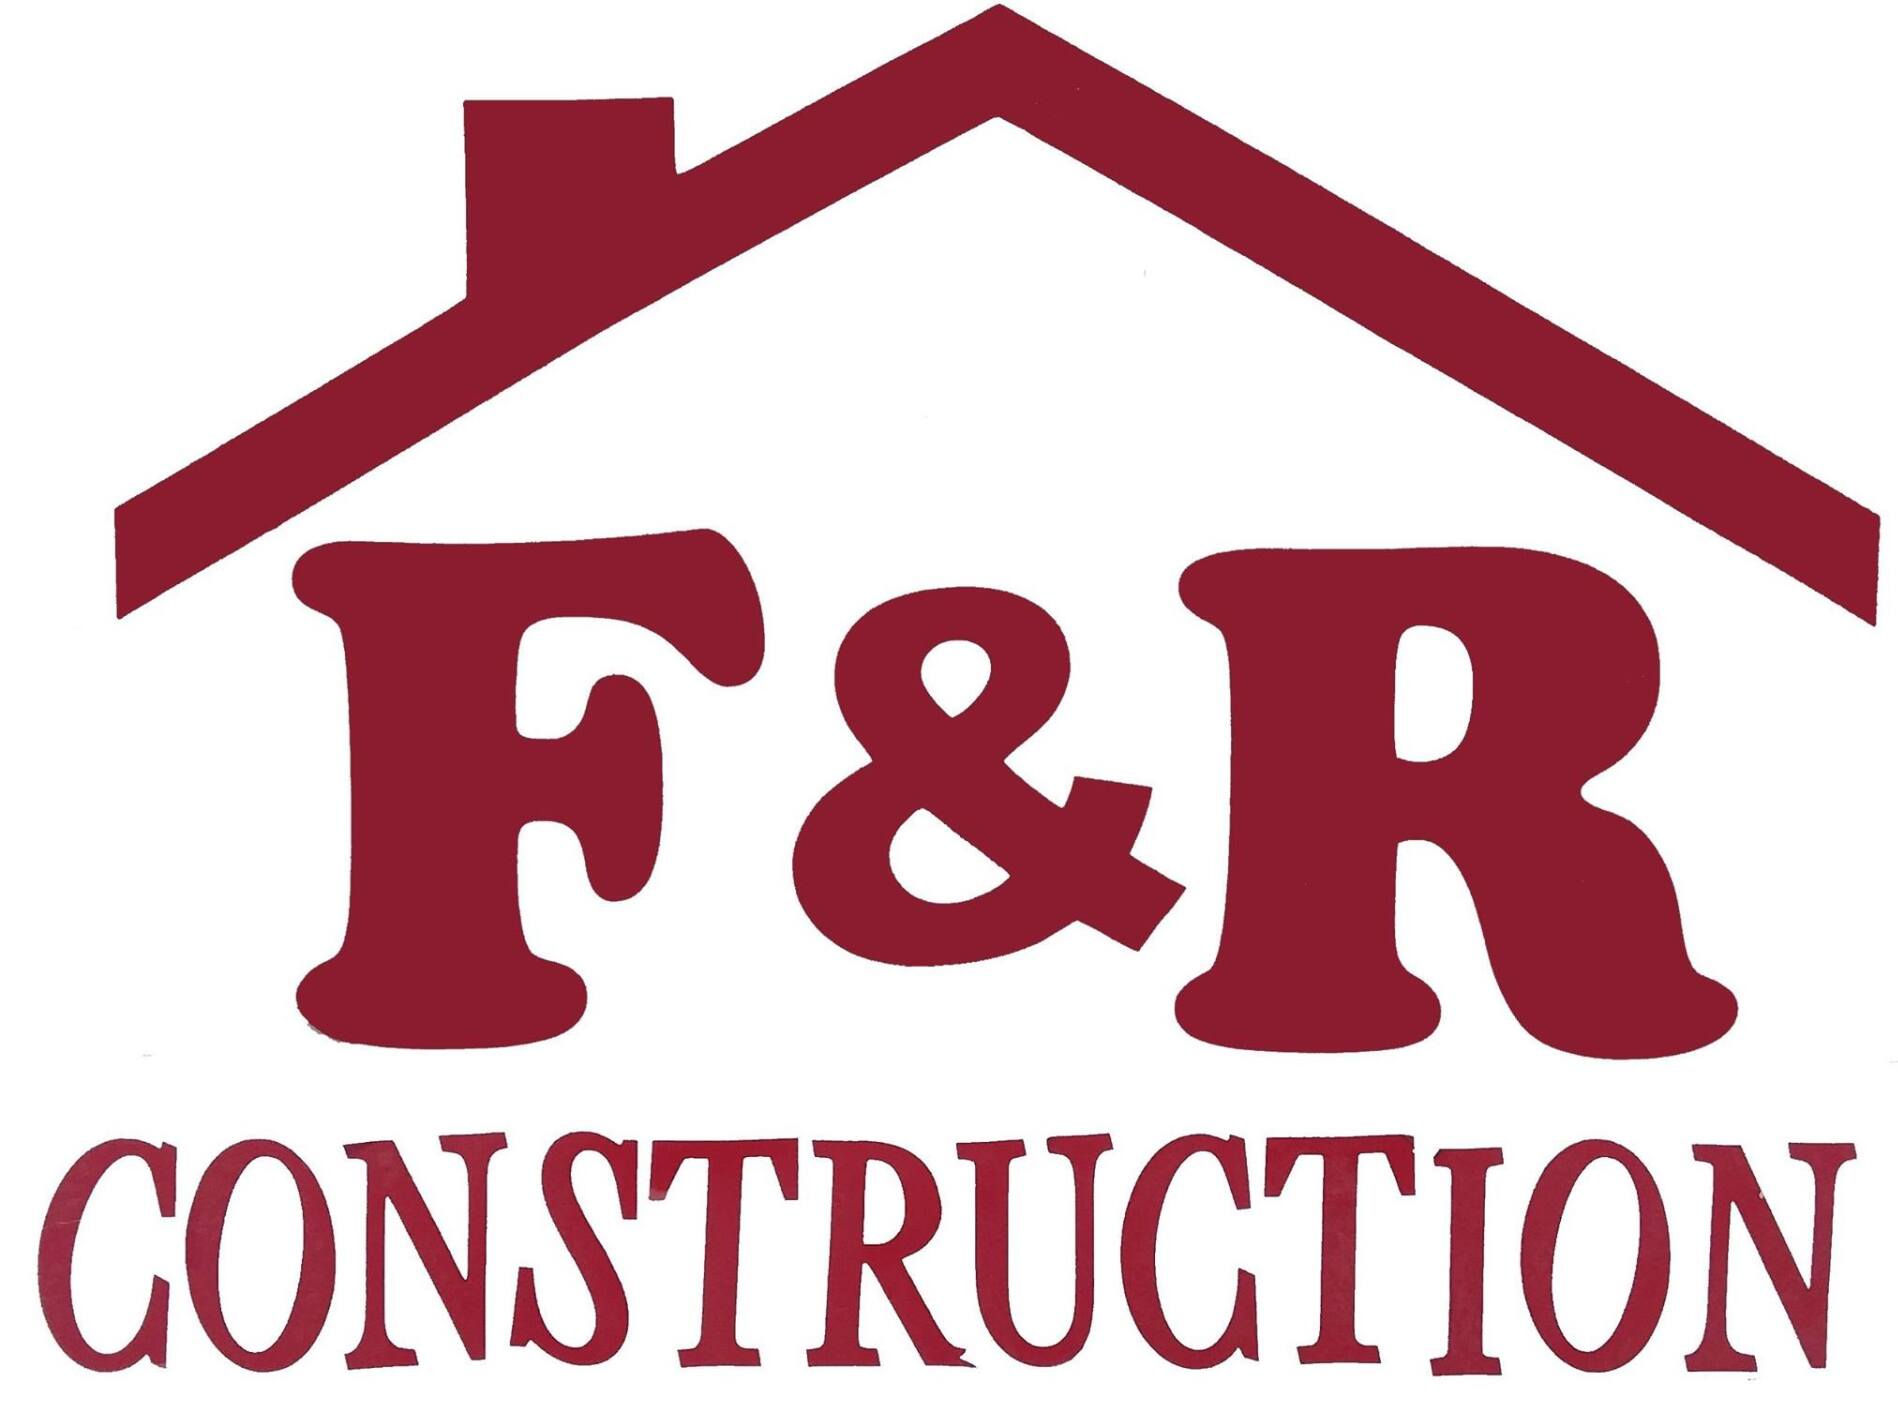 F&R Construction